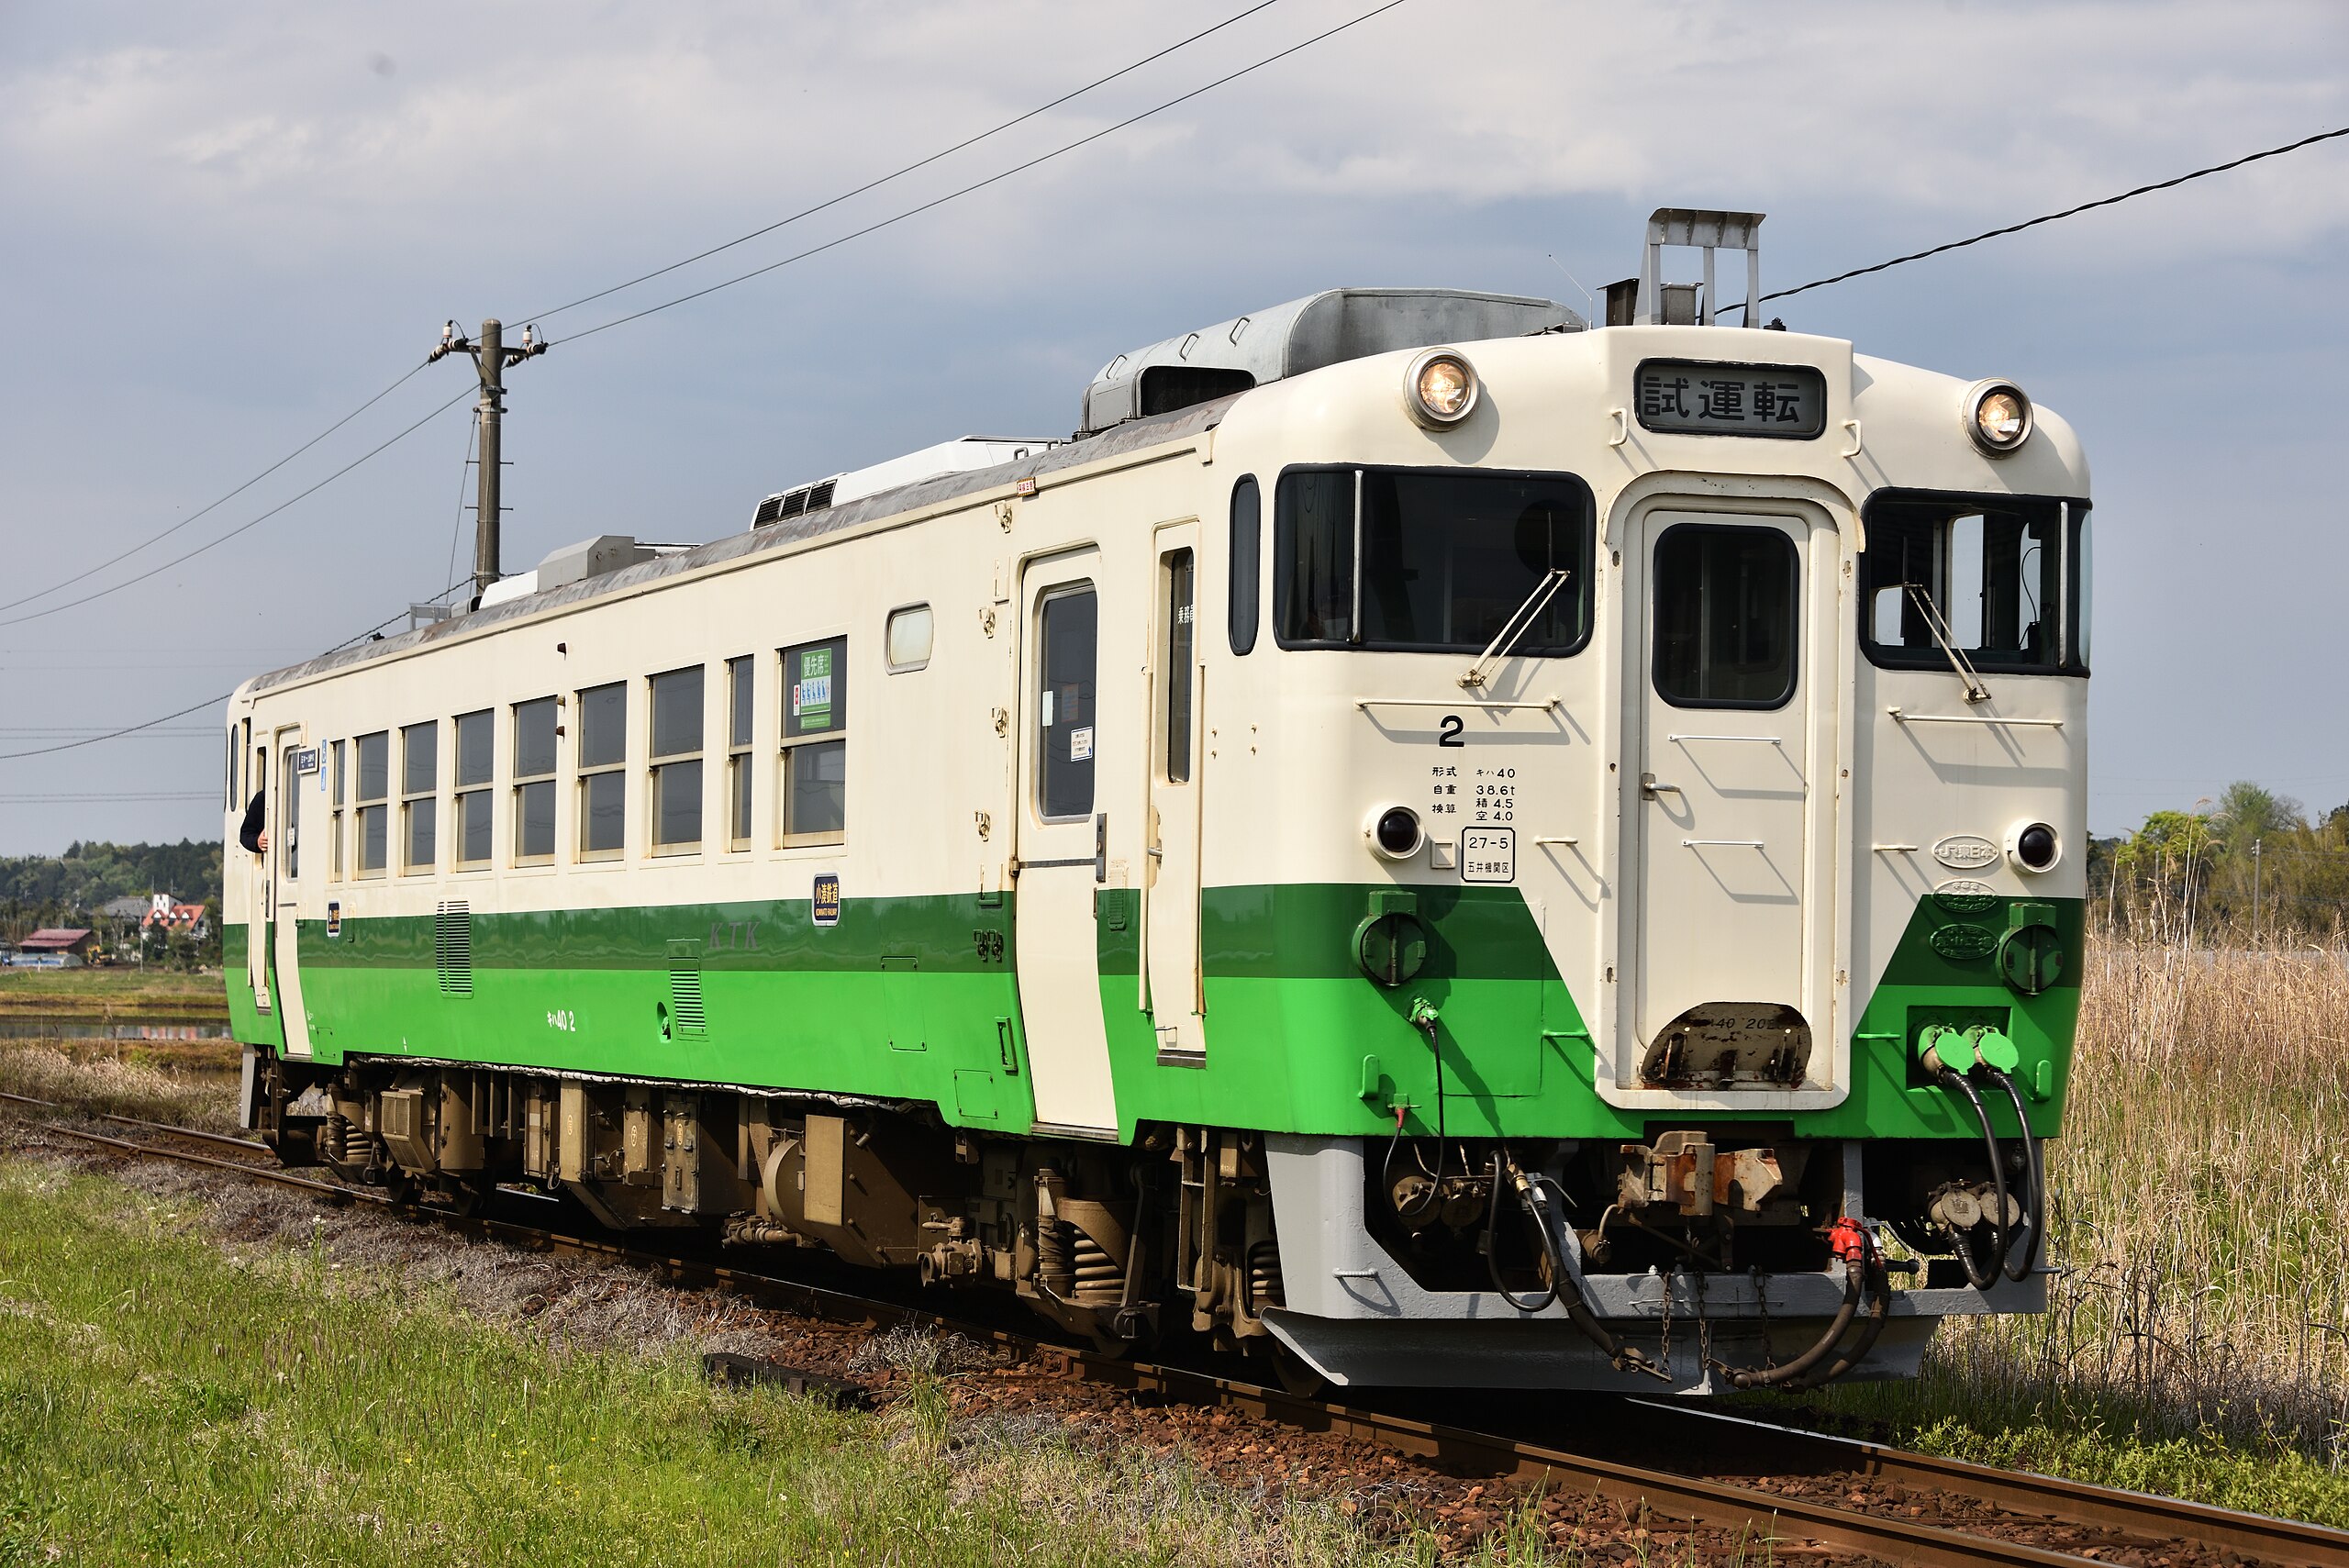 File:小湊鐵道キハ40 2.jpg - Wikimedia Commons